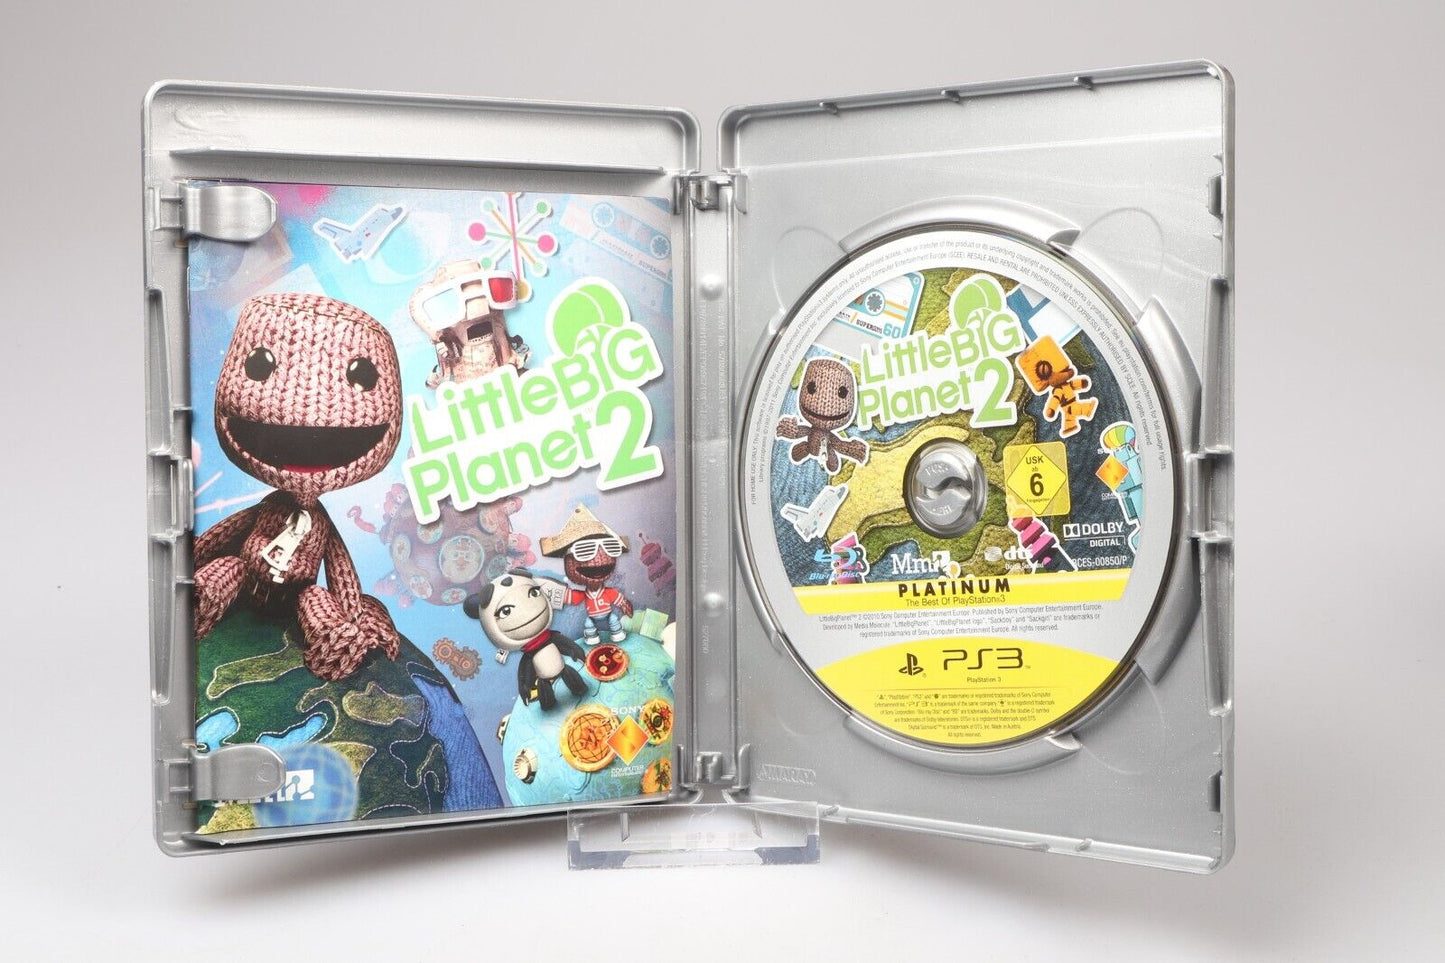 PS3 | LittleBigPlanet 2 PL (PAL)